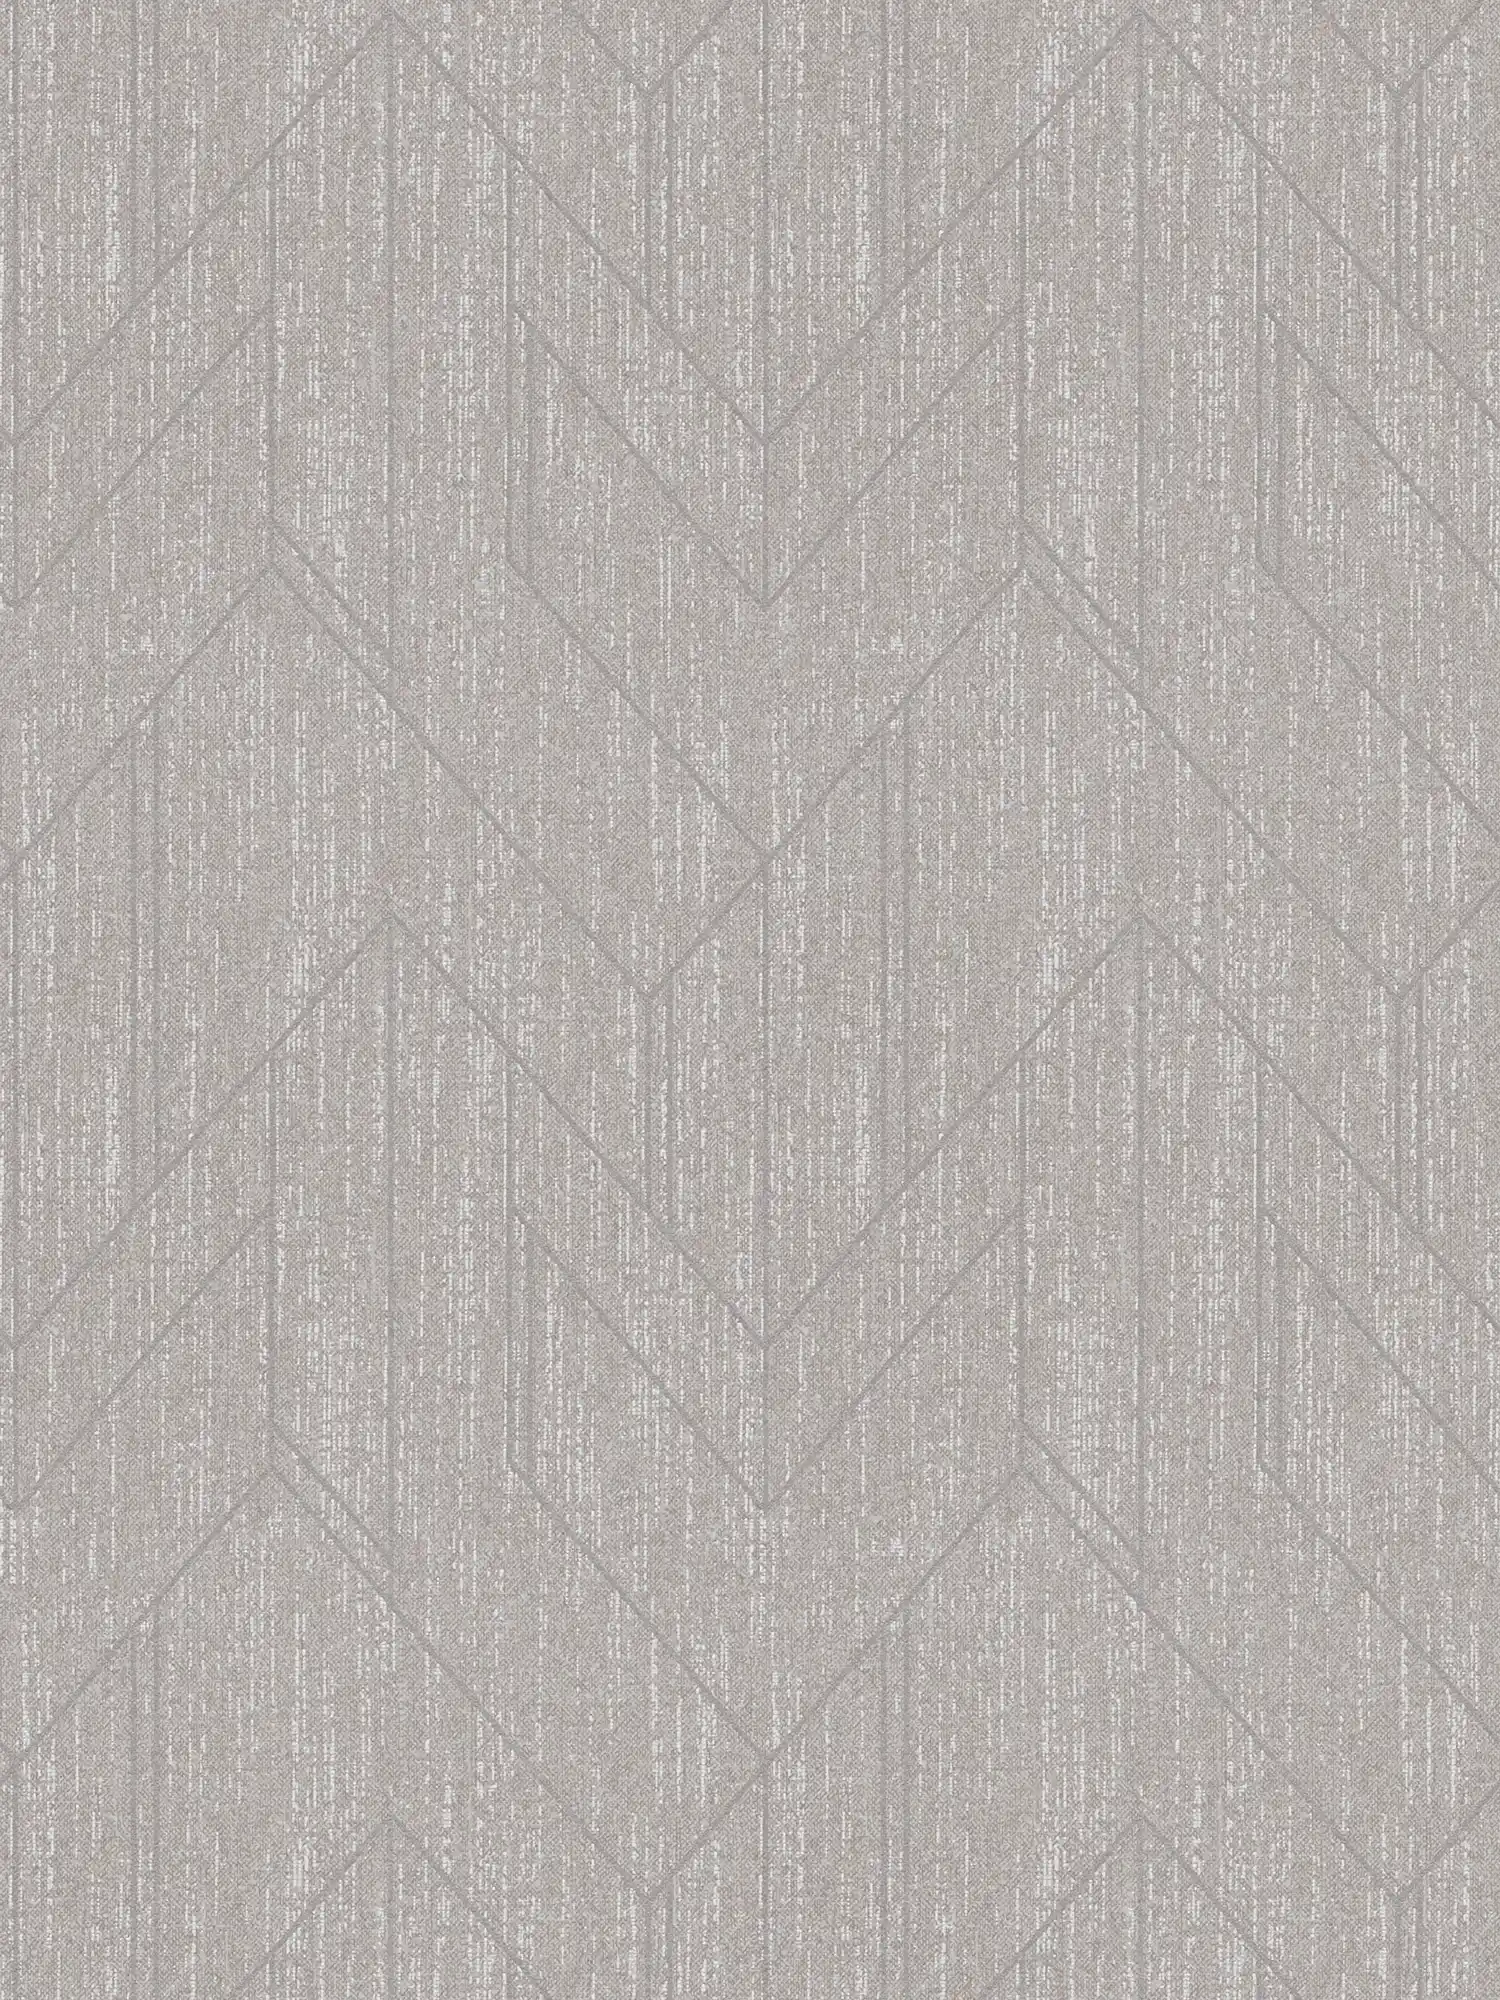 Textiloptik Tapete mit Strukturdesign & silbernem Muster – Grau
